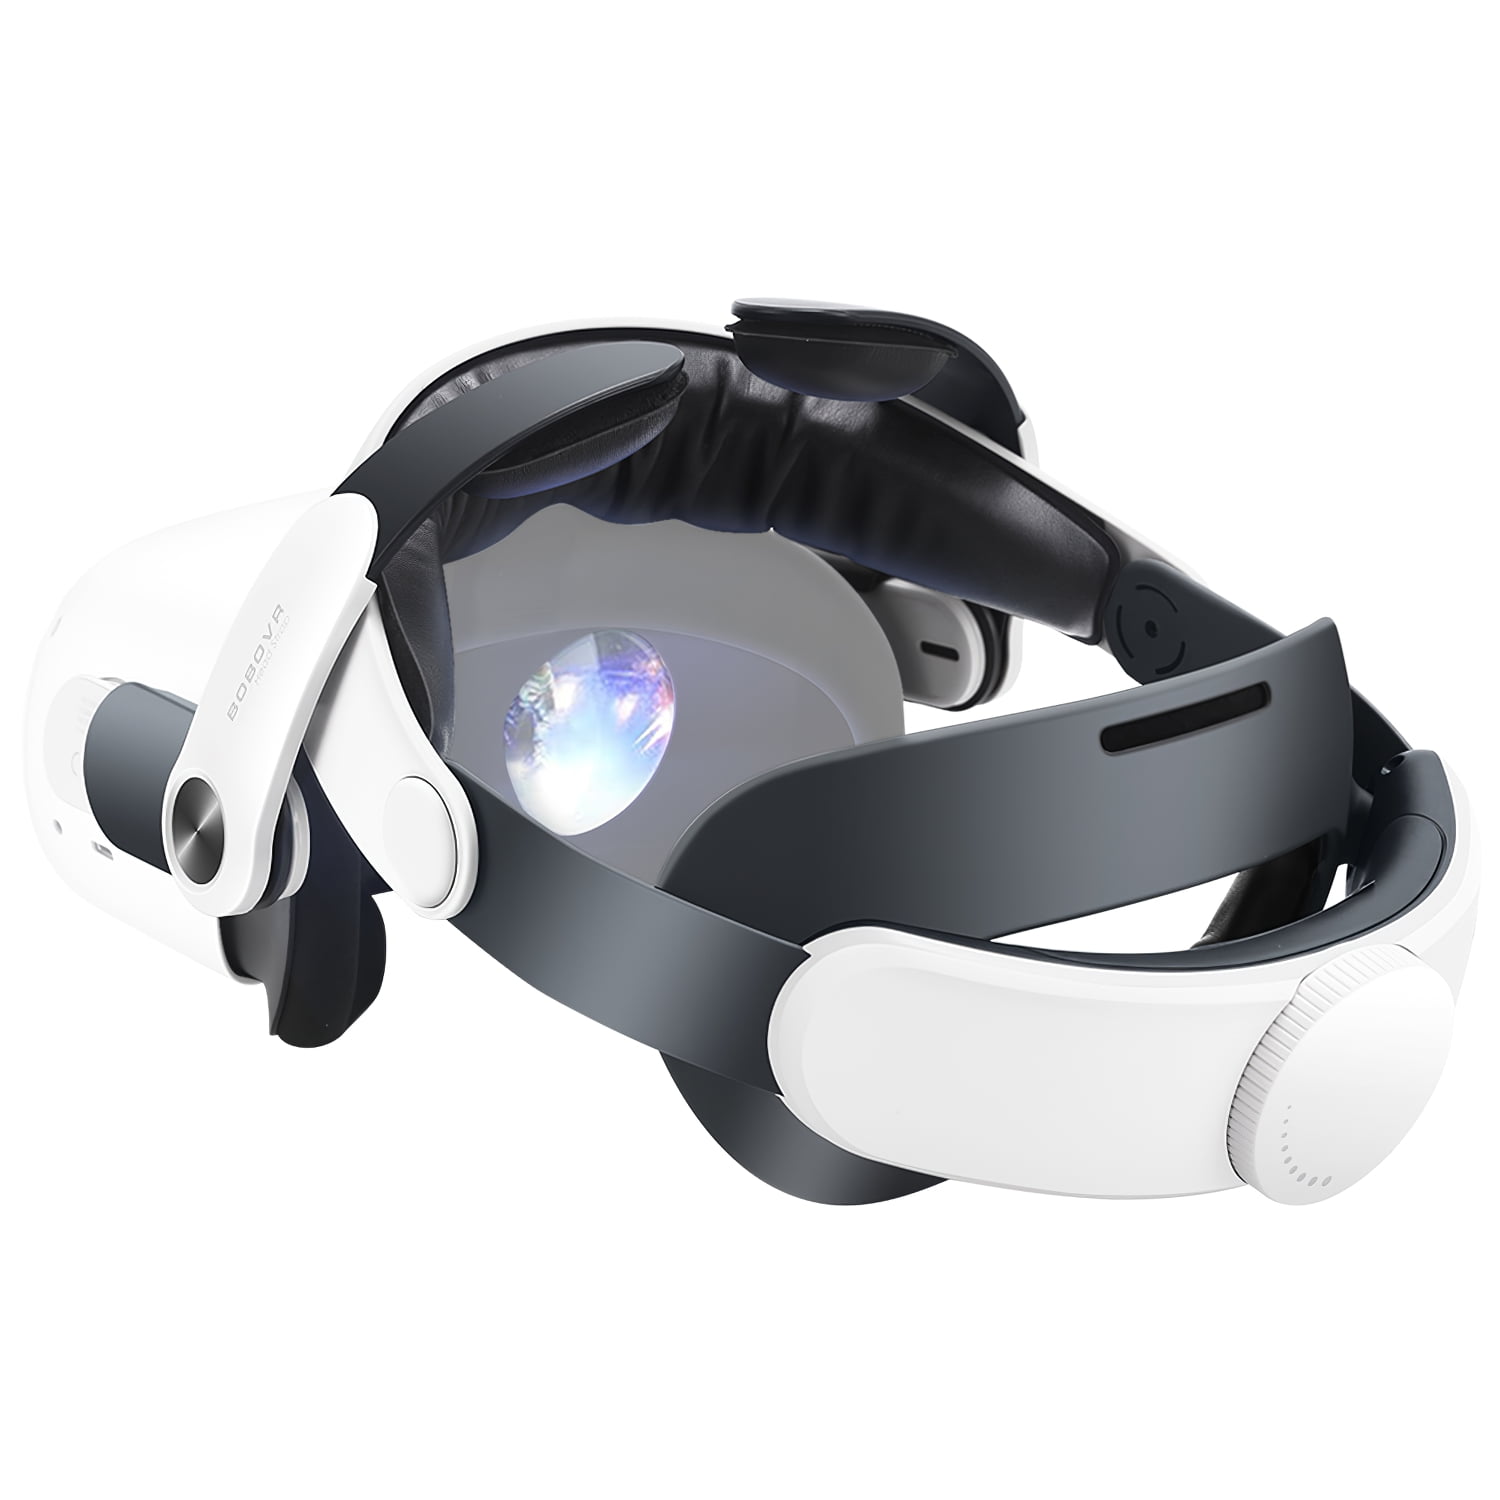 M2 Head Strap For Meta/Oculus Quest 2 Reduce Face Pressure Enhance Comfort Replacement of Strap VR Accessories - Walmart.com